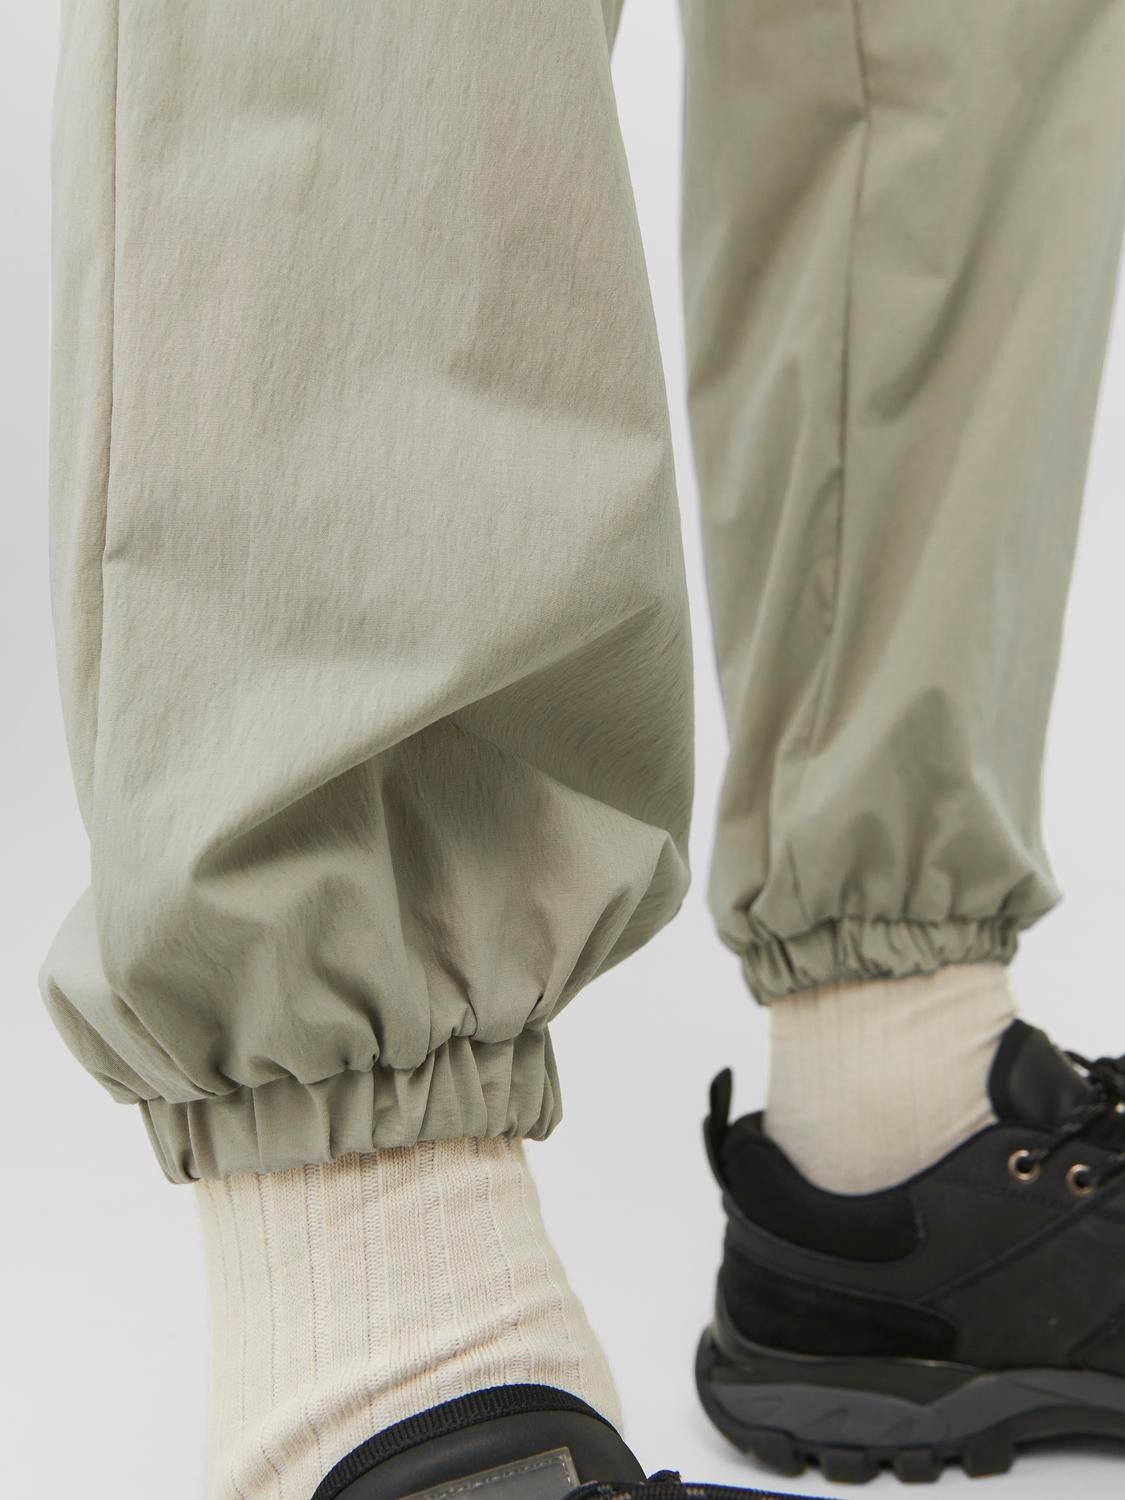 Jack & Jones Loose Fit Chino trousers -Crockery - 12234701